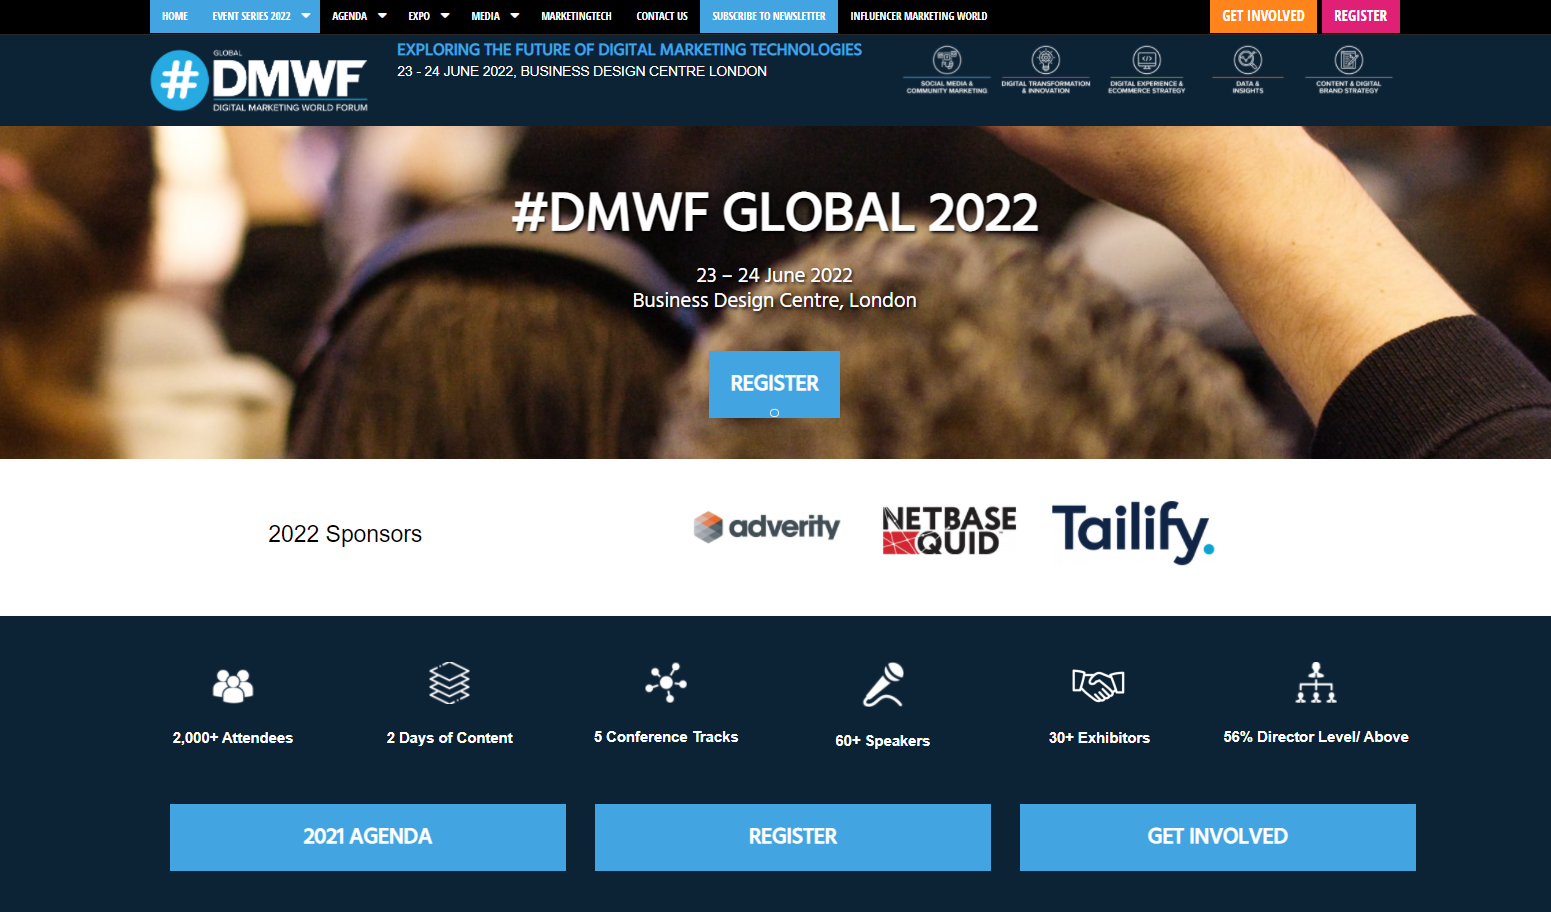 DMWF digital marketing conference 2022